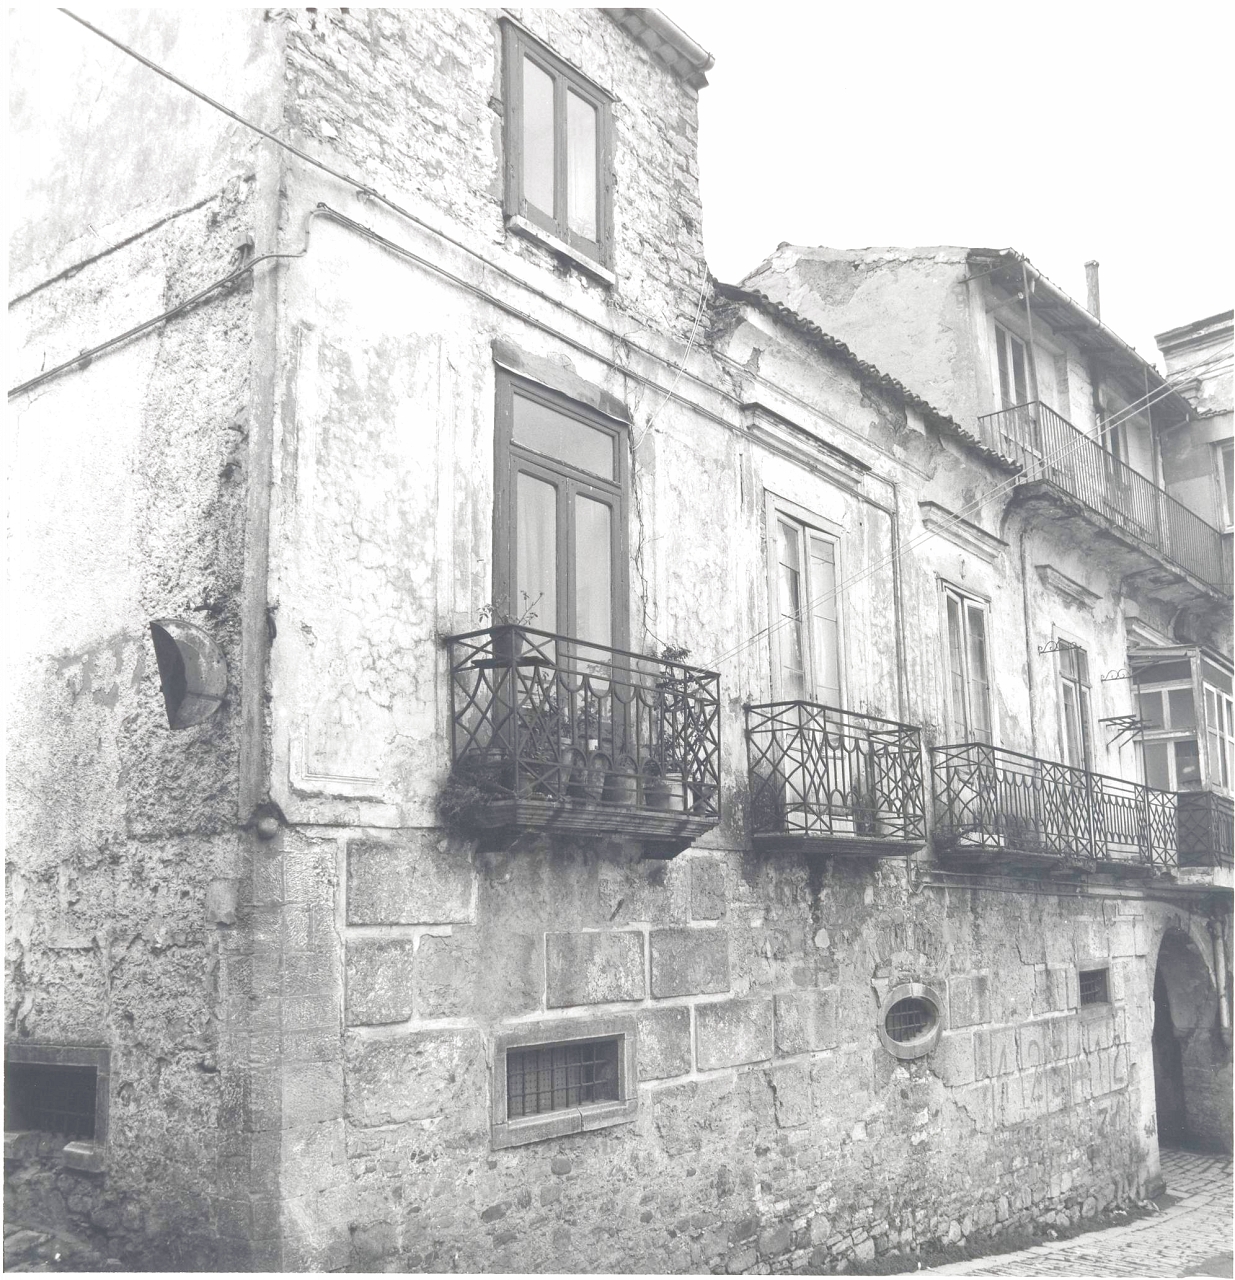 Palazzo dott. Cafazzo (palazzo) - Bisaccia (AV)  (XIX, inizio)